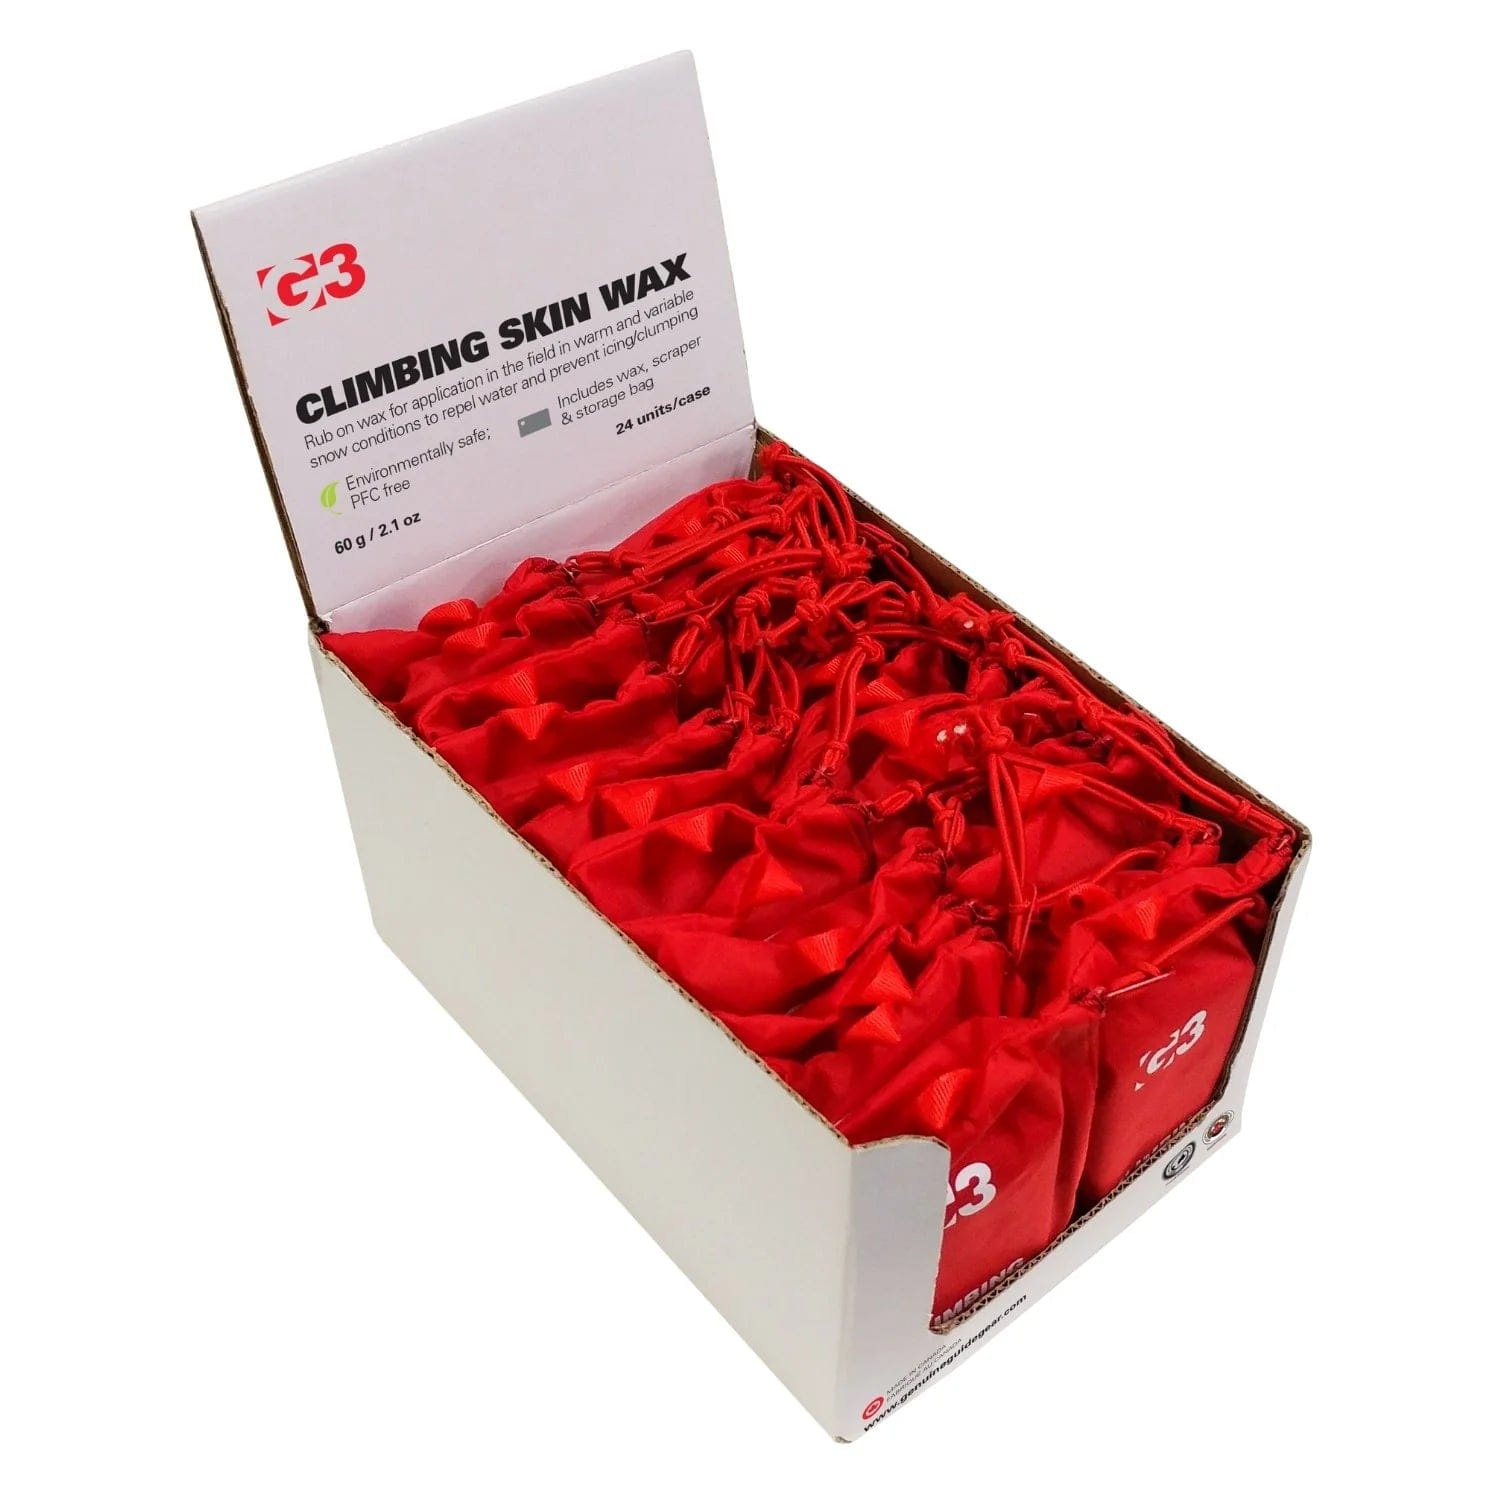 G3 Repair Kit Box of 24 Plant Based Skin Wax Kit 007461